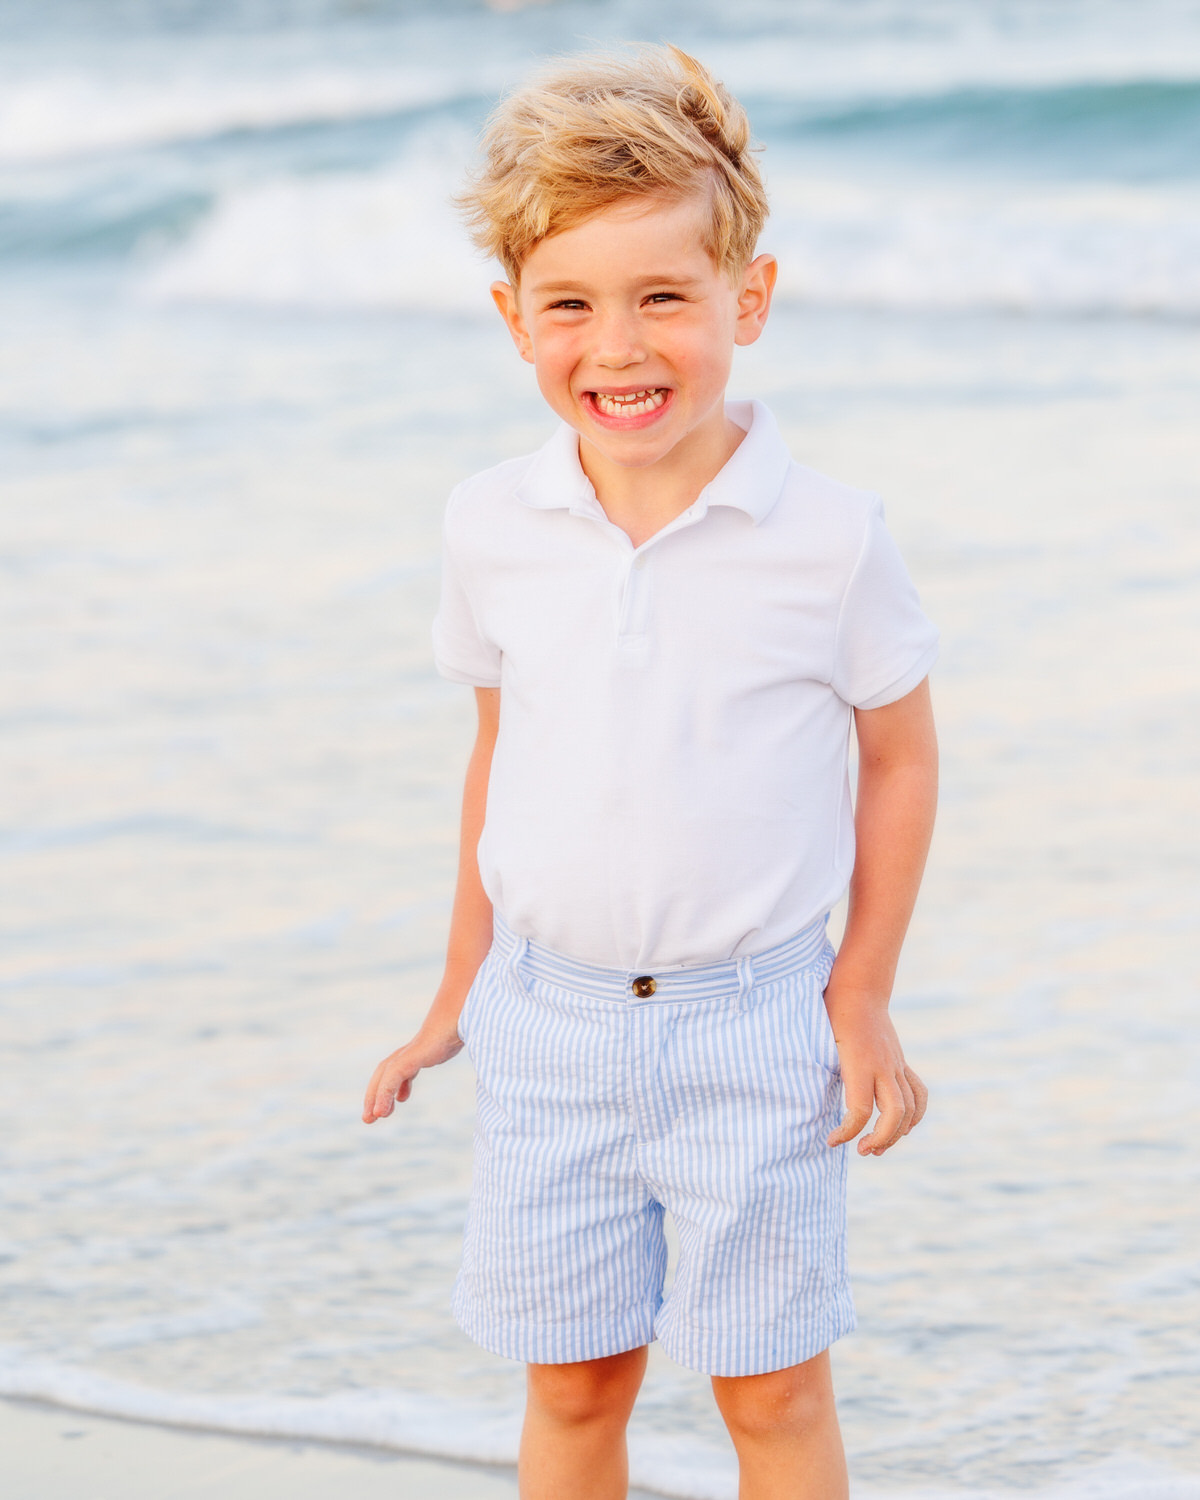 Little boy beach portrait